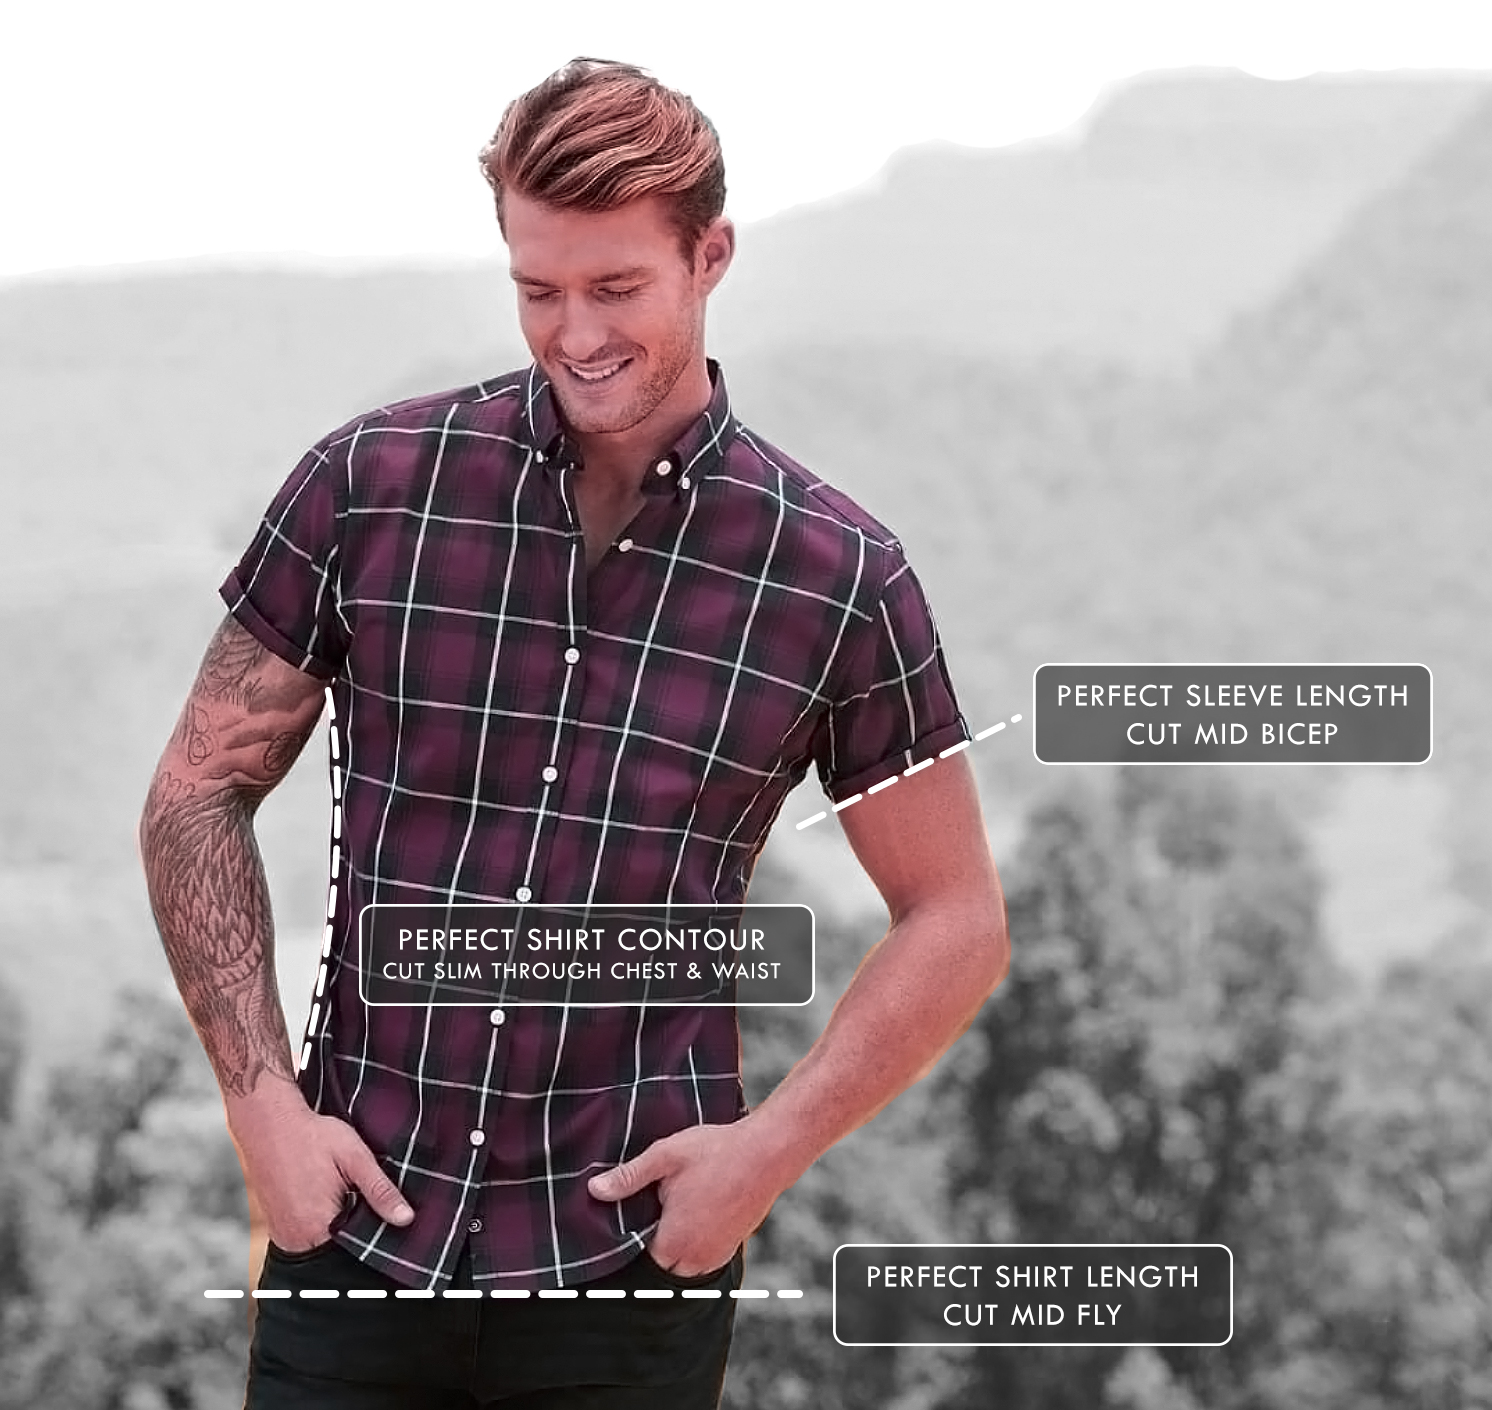 Slim Fit Dress Shirts for Men - Buy Online Now